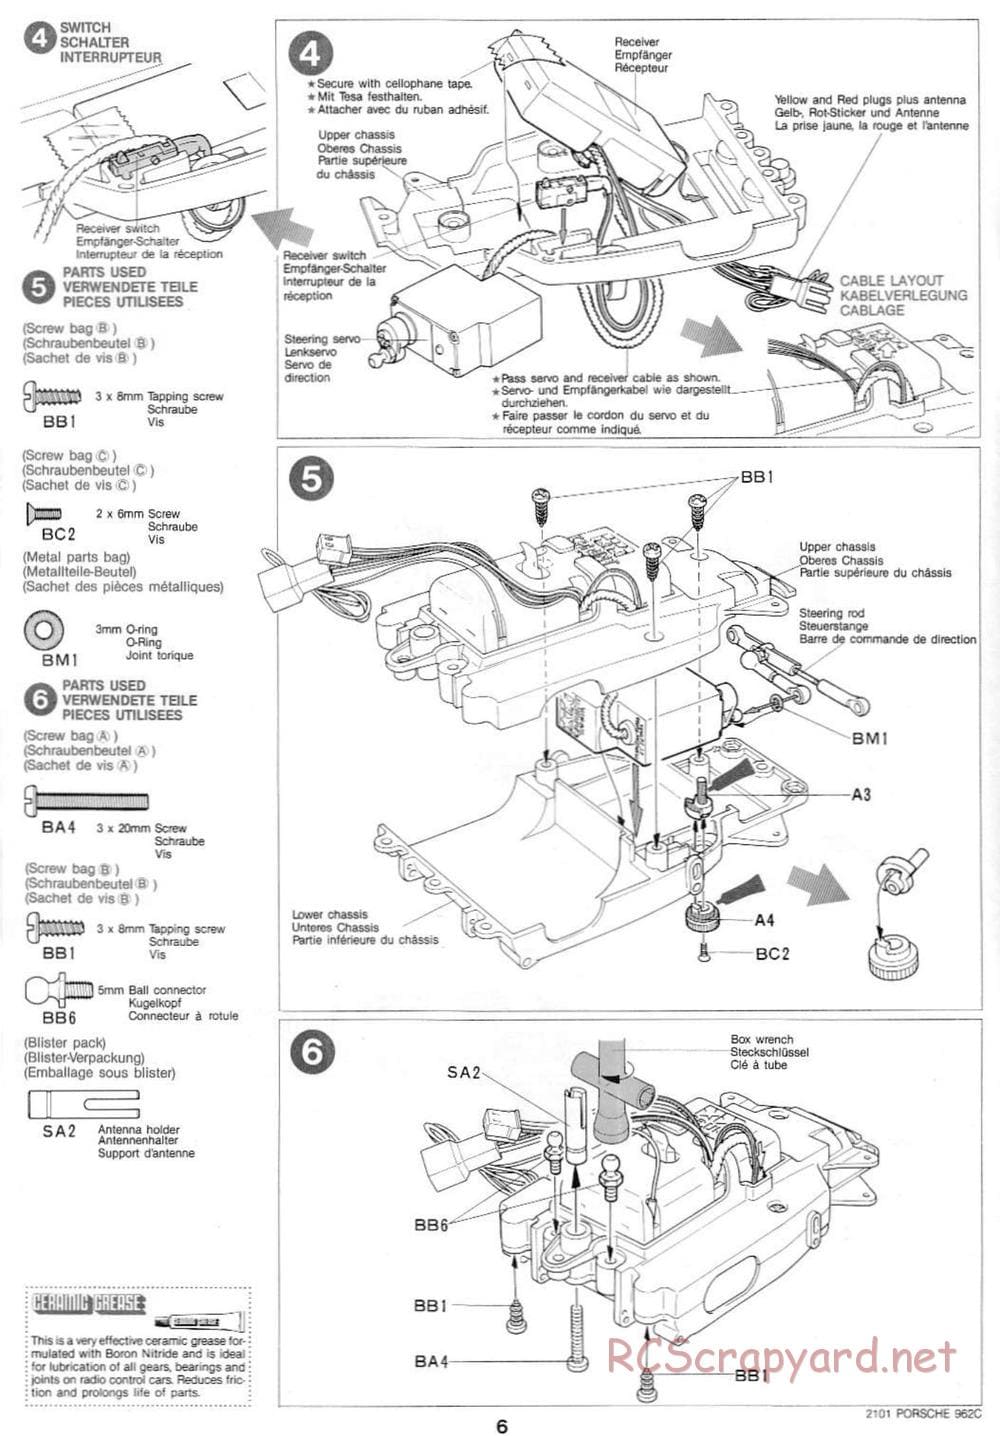 Tamiya - Tamtech - Porsche 962C Chassis - Manual - Page 6